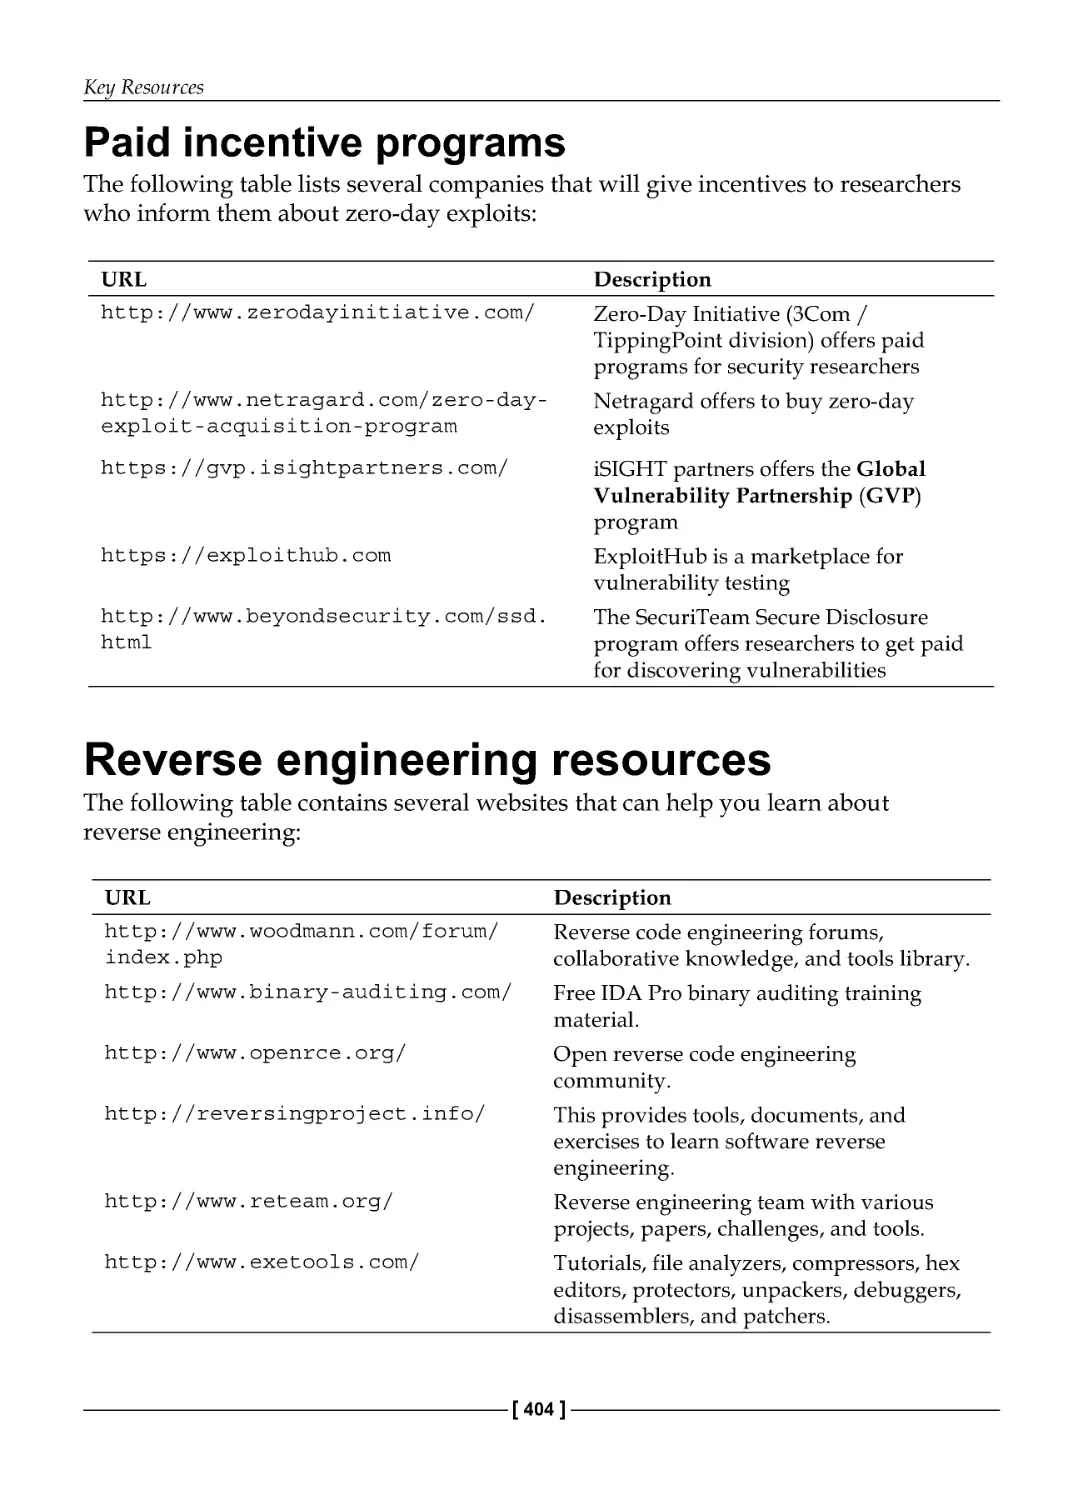 Reverse engineering resources